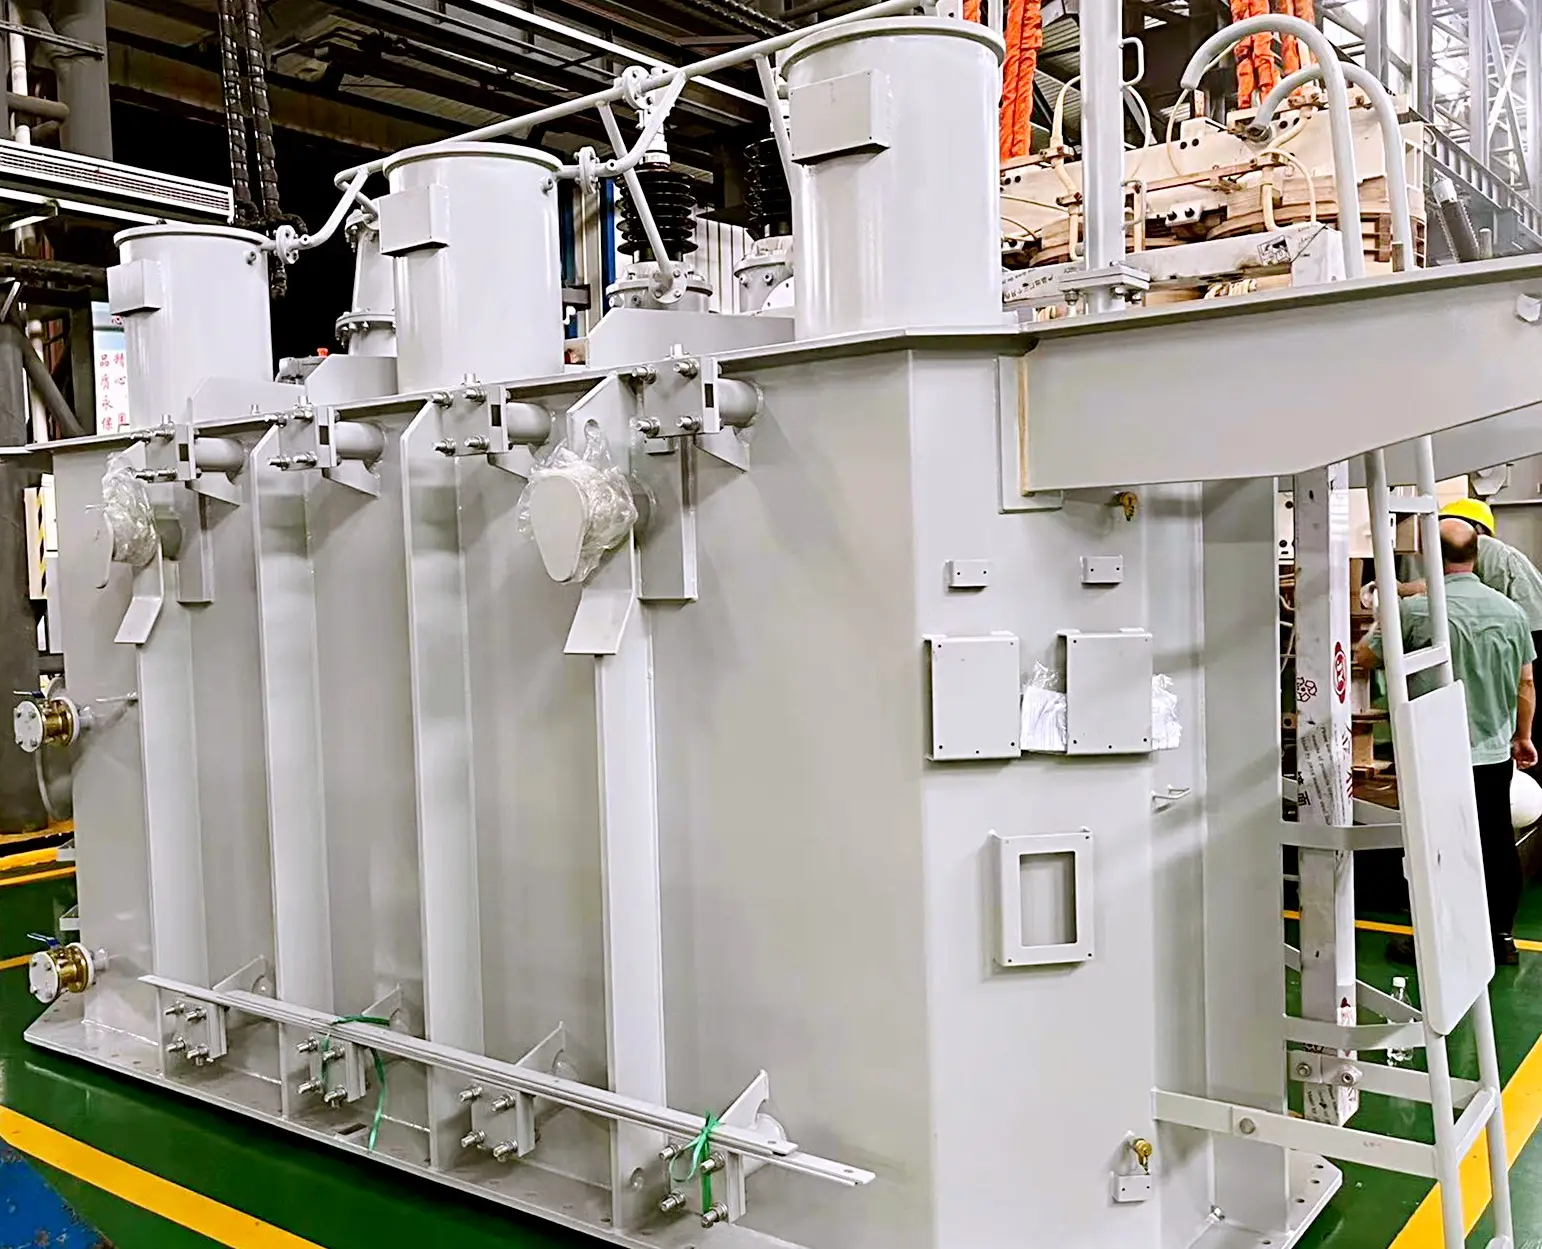 China Fabrik Jiangsu Yawei Transformator Hochfrequenz dreiphasig 110kV 8mVA 10mVA 12,5 mVA hochwertige Leistungs transformatoren